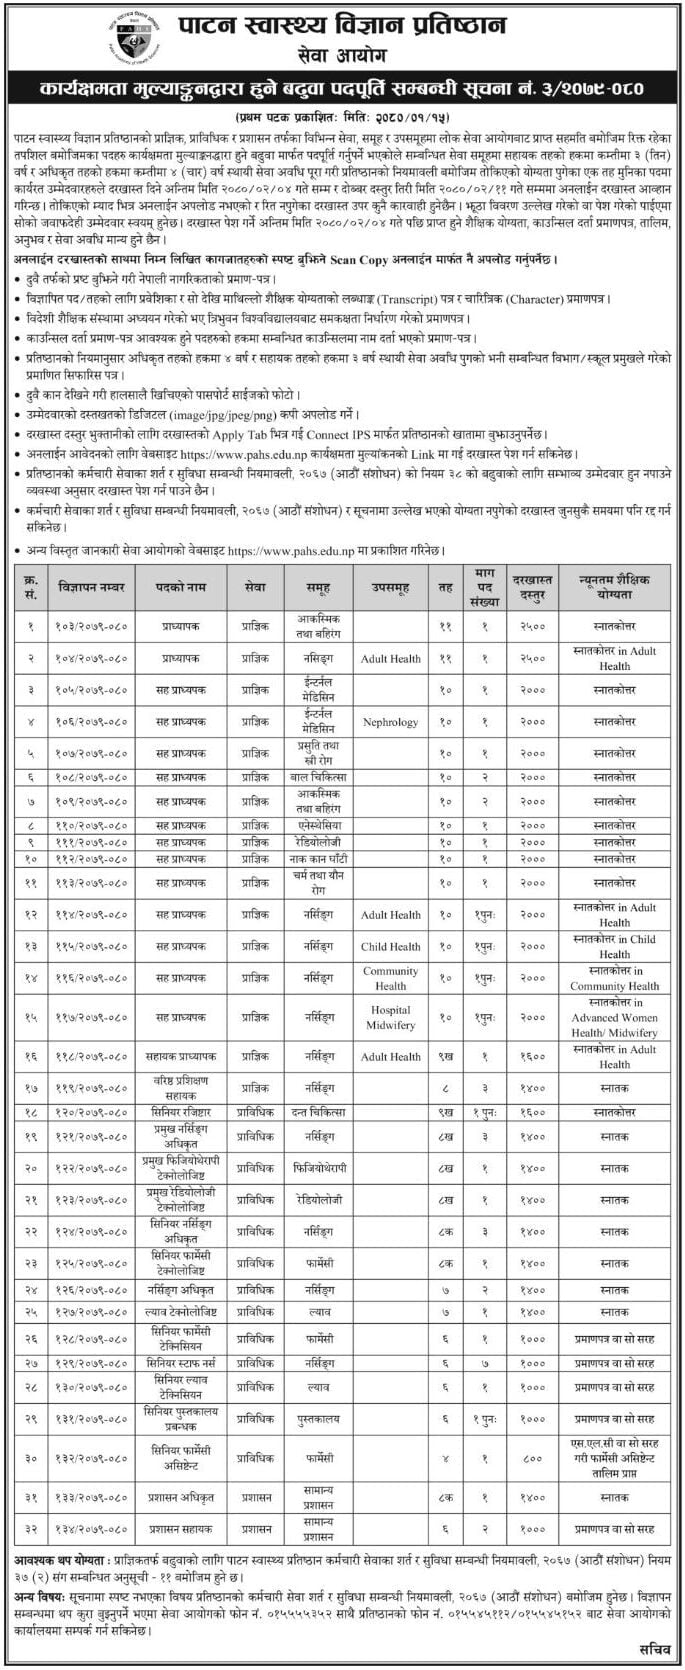 (PAHS) Patan Academy of Health Sciences Written Exams Program 2080